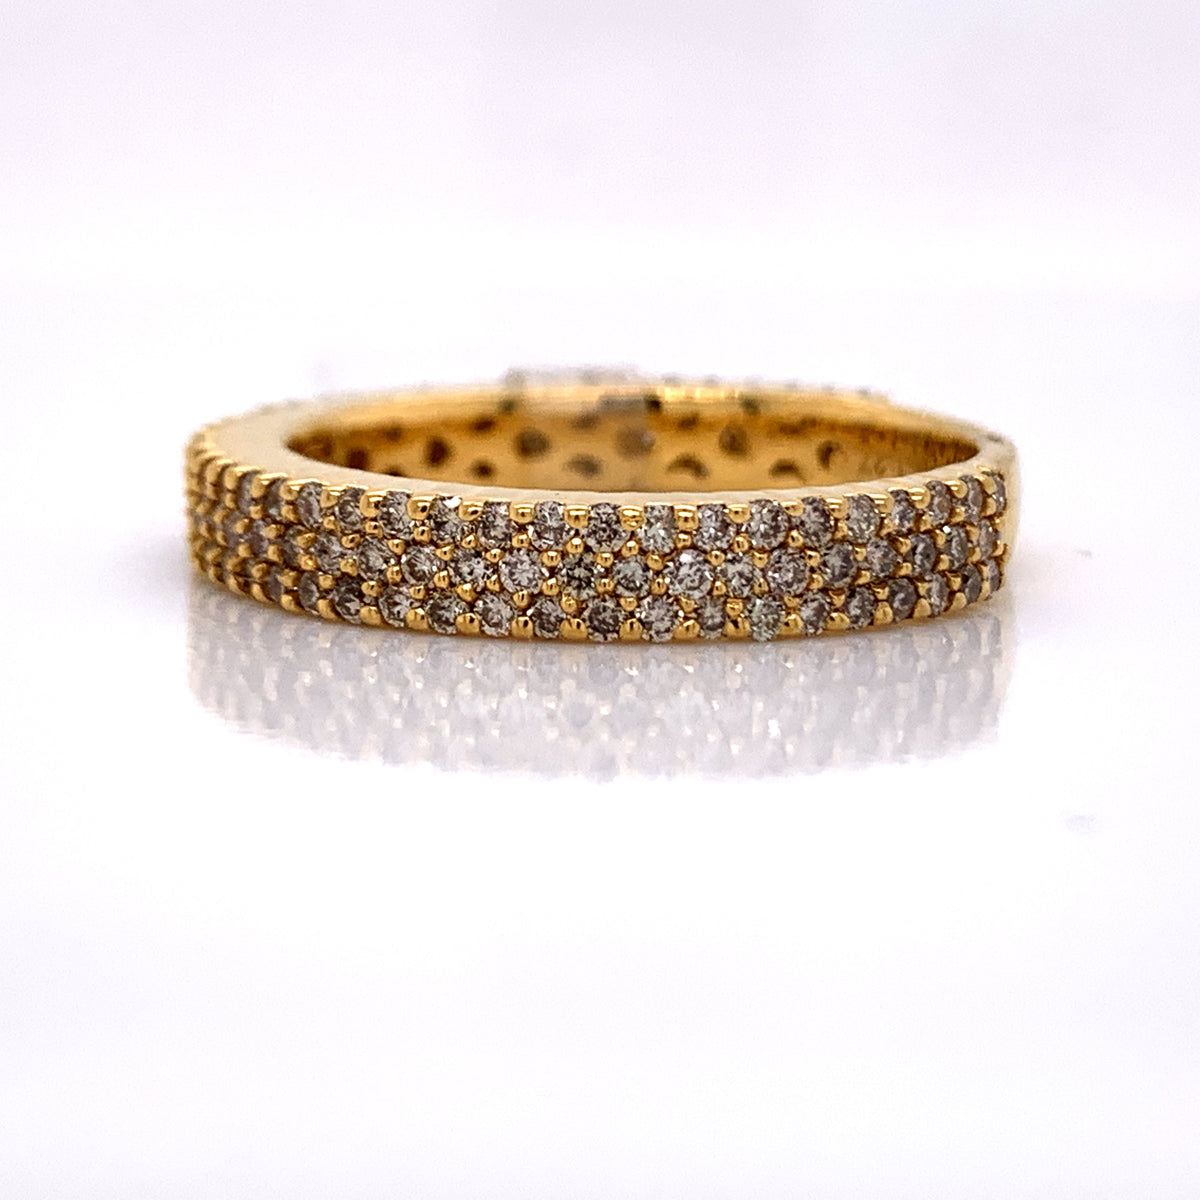 1.27 CT. Diamond Ring in 10K Gold - White Carat Diamonds 